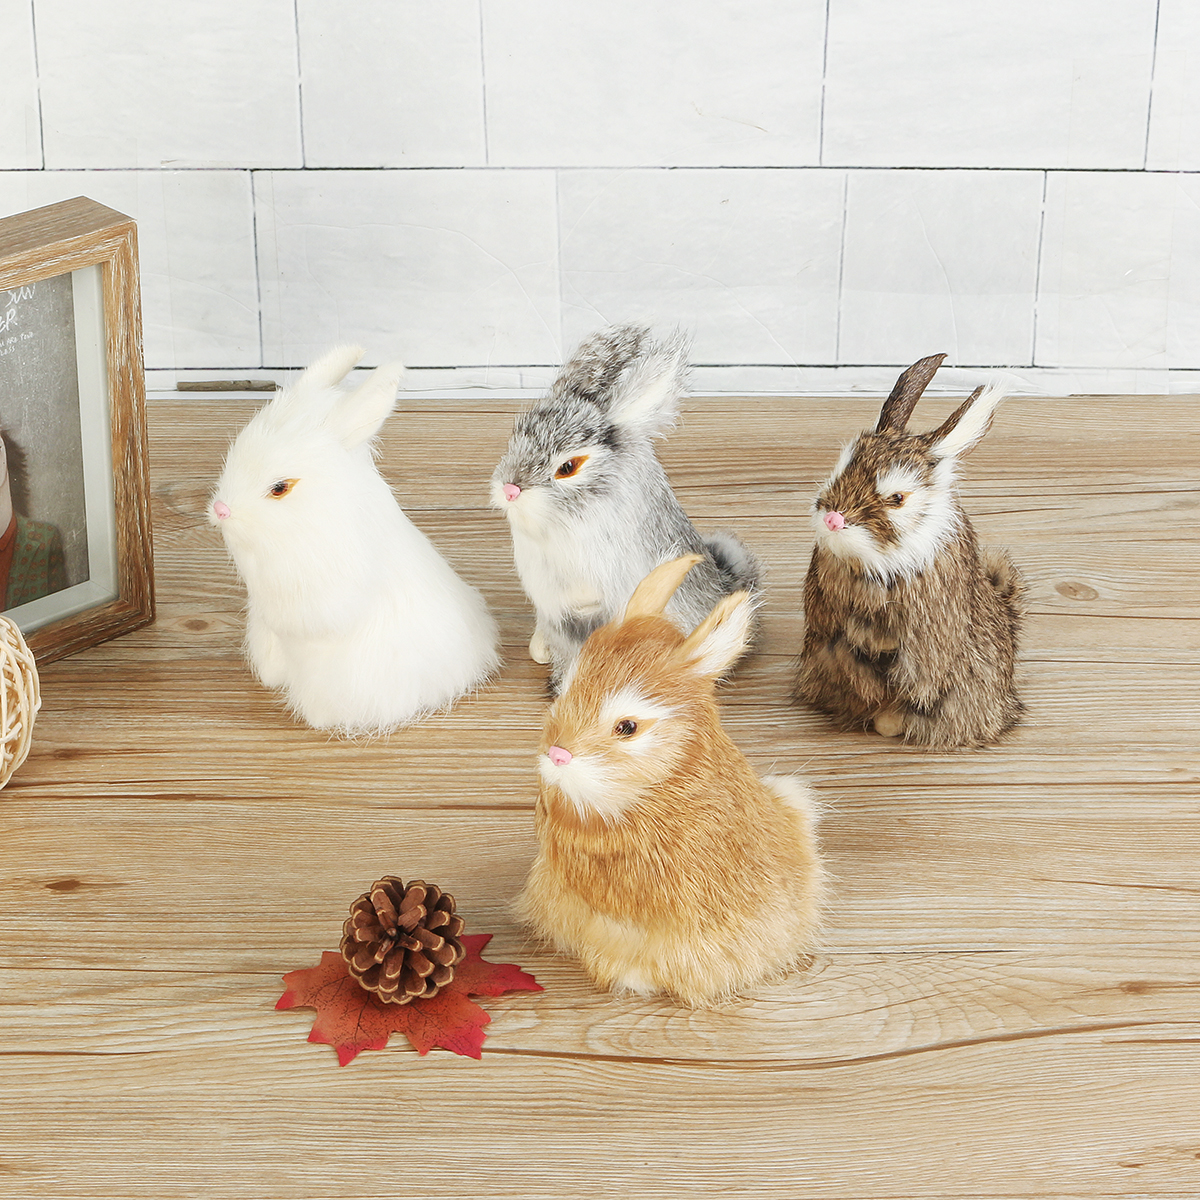 GrayYellowBrownWhite-Rabbits-Handmade-Easter-Bunnies-Home-Decorations-Desktop-Ornament-1452976-3